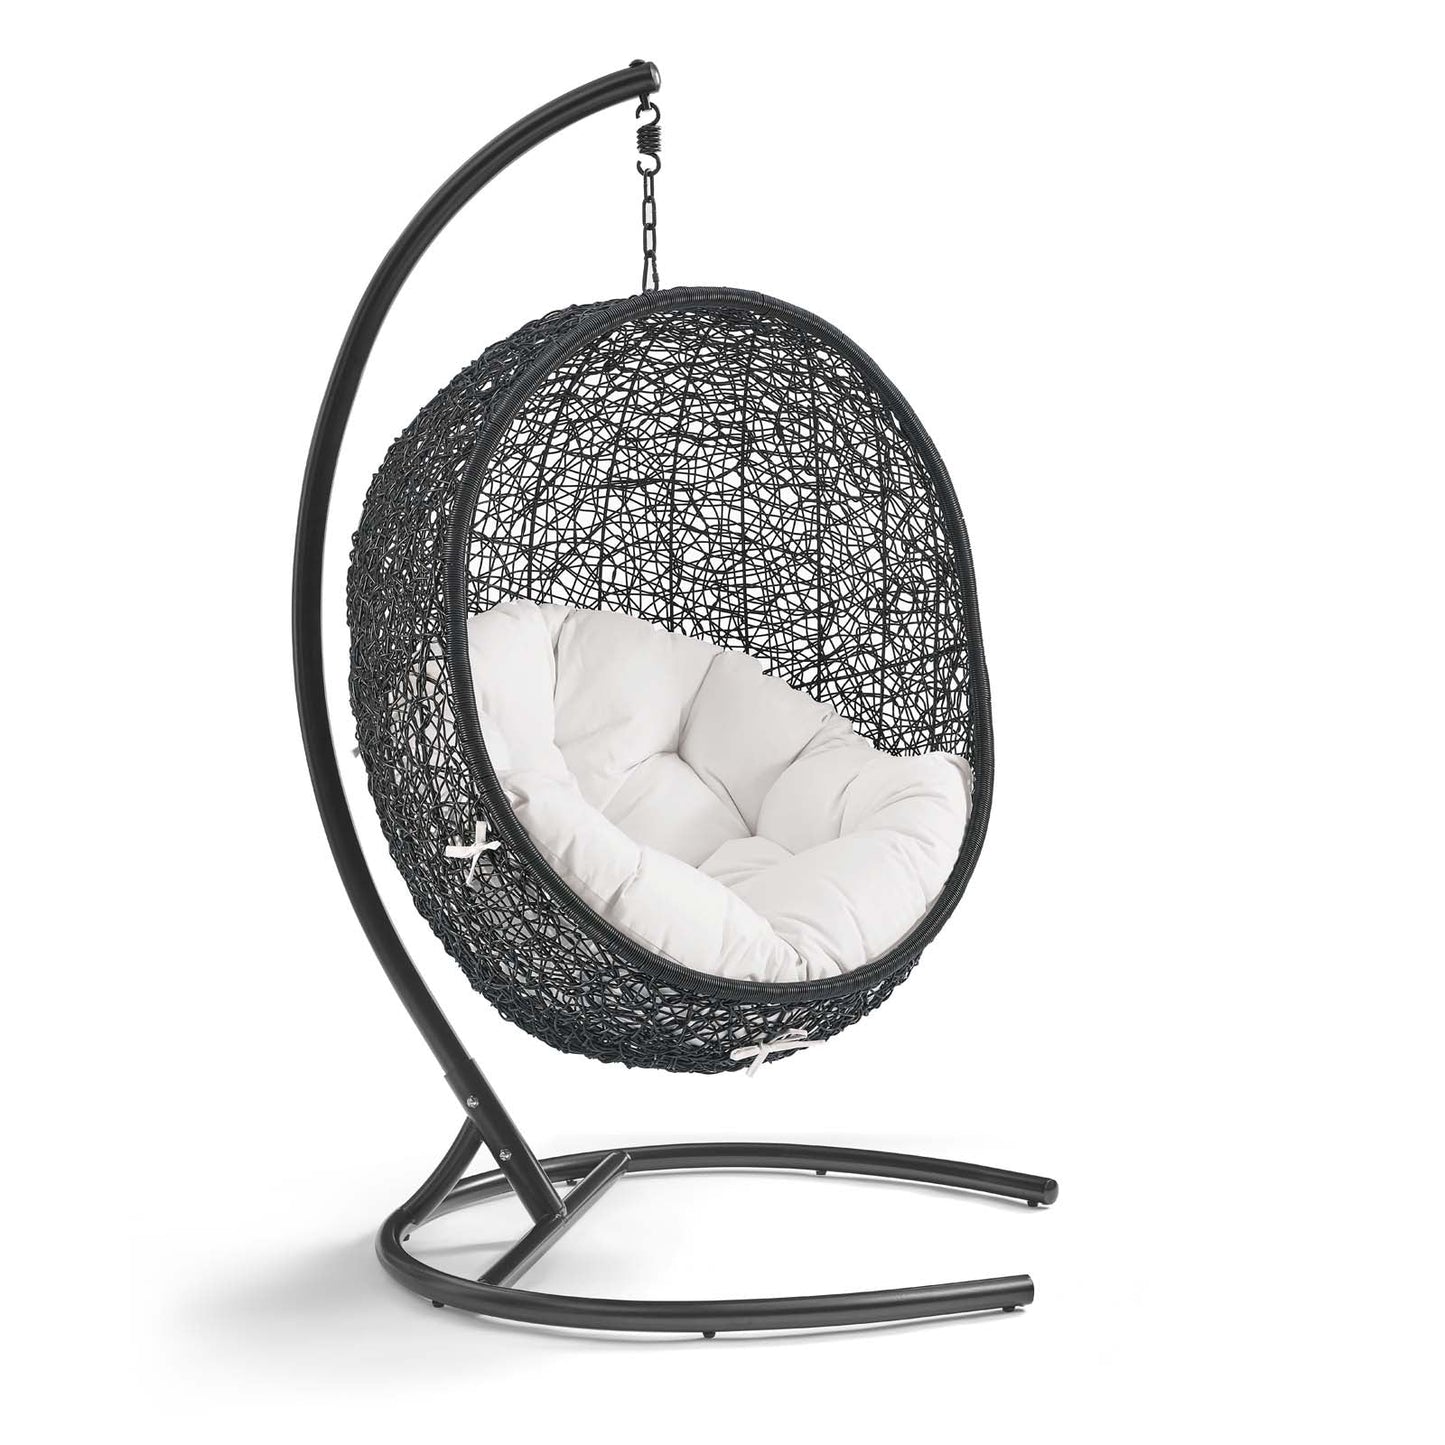 Encase Sunbrella® Outdoor Swing Lounge Chair